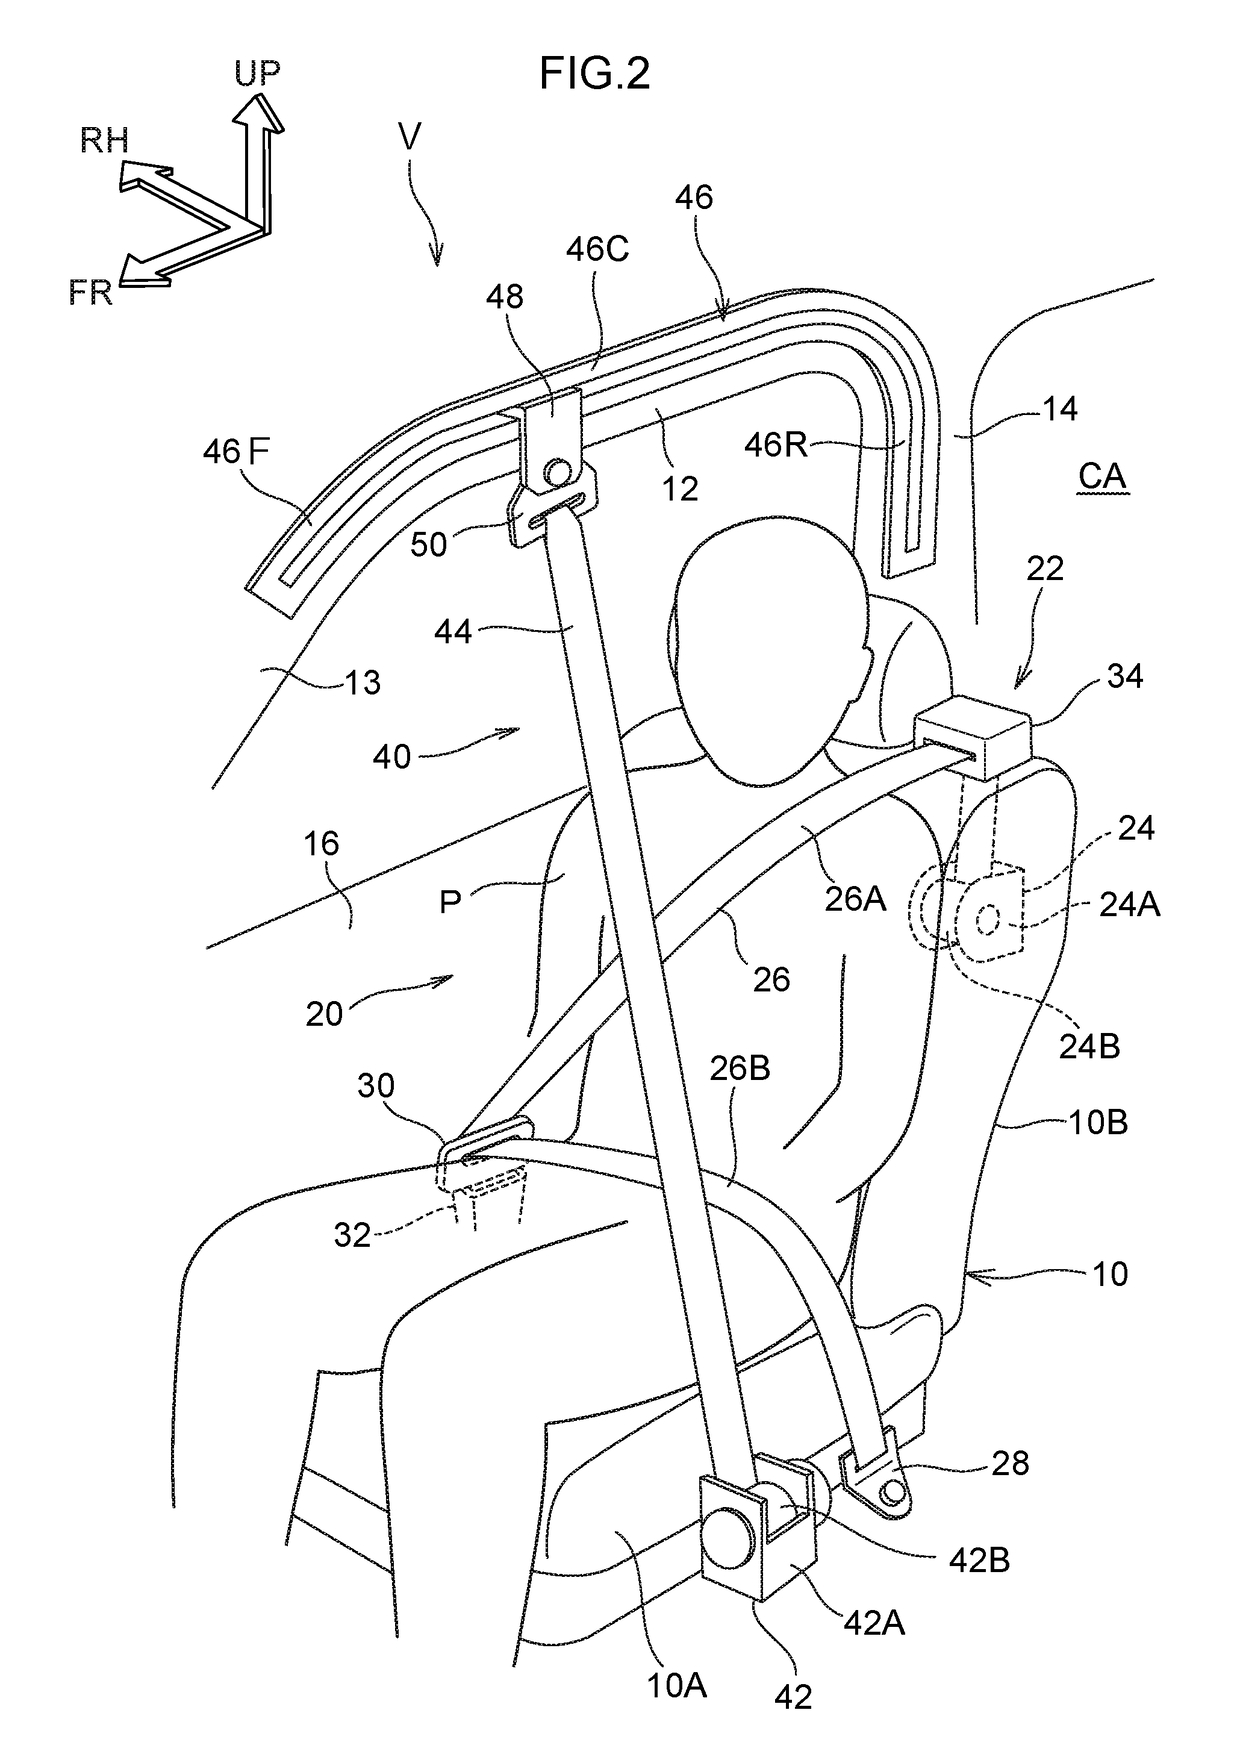 Four-point seatbelt device